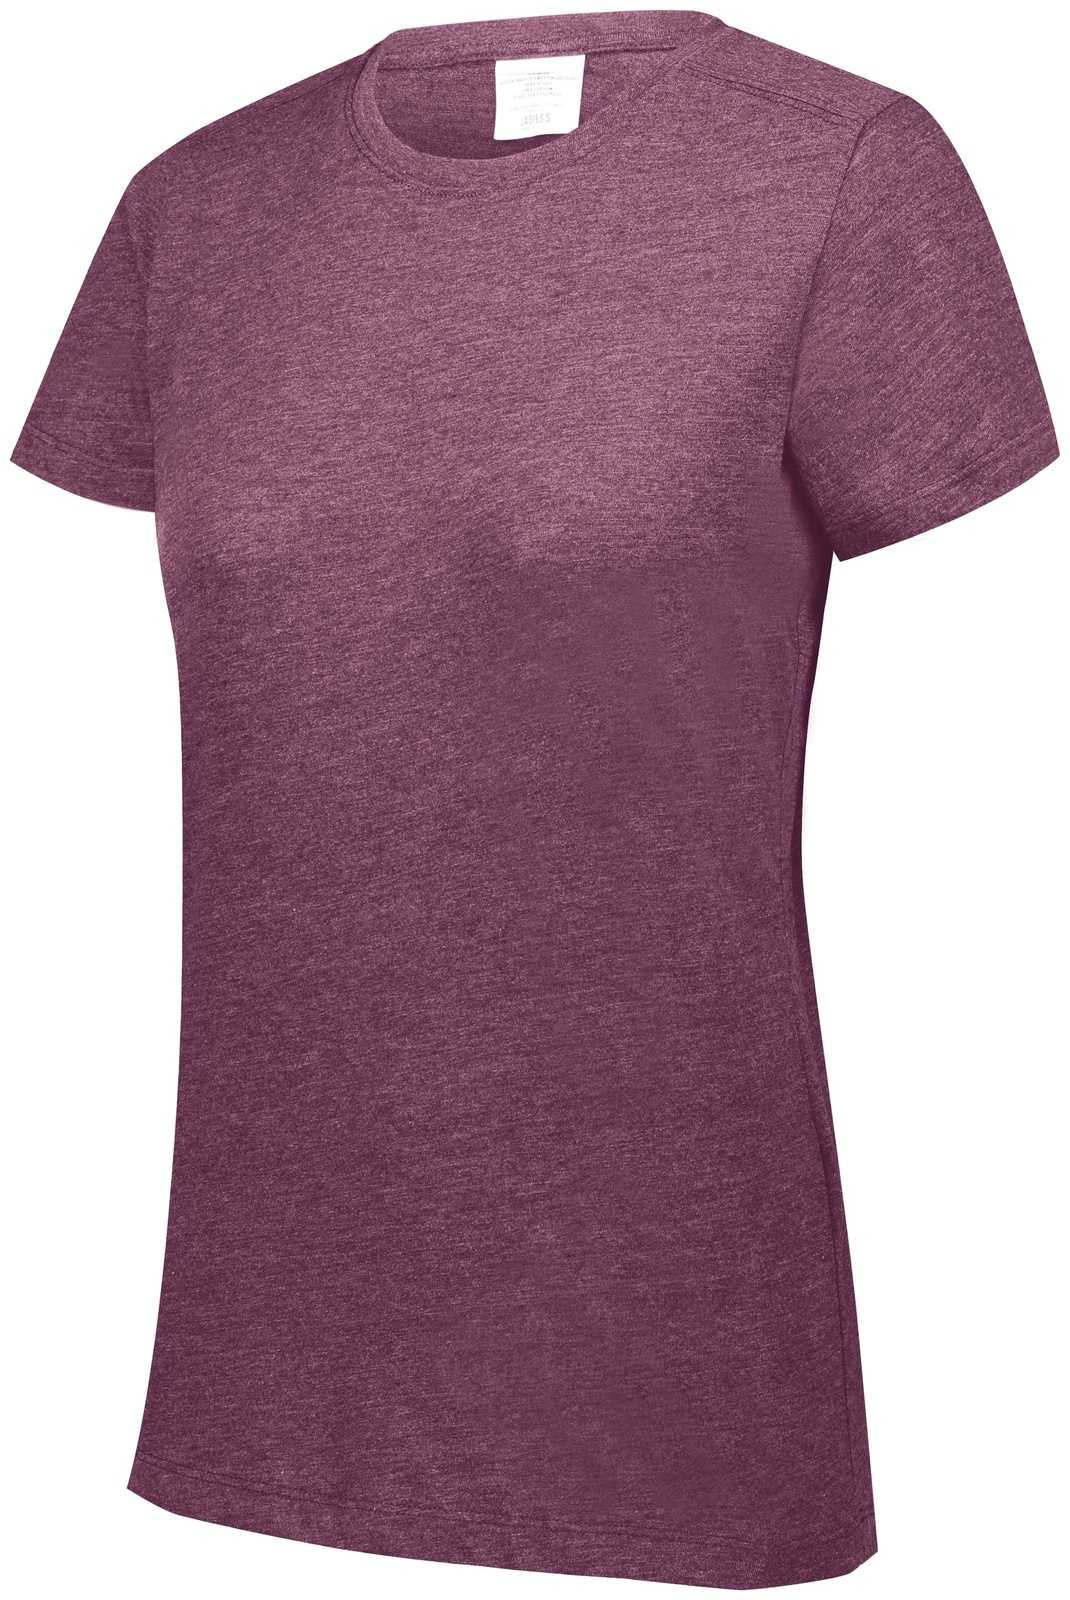 Augusta 3067 Ladies Tri-Blend T-Shirt - Maroon Heather - HIT a Double